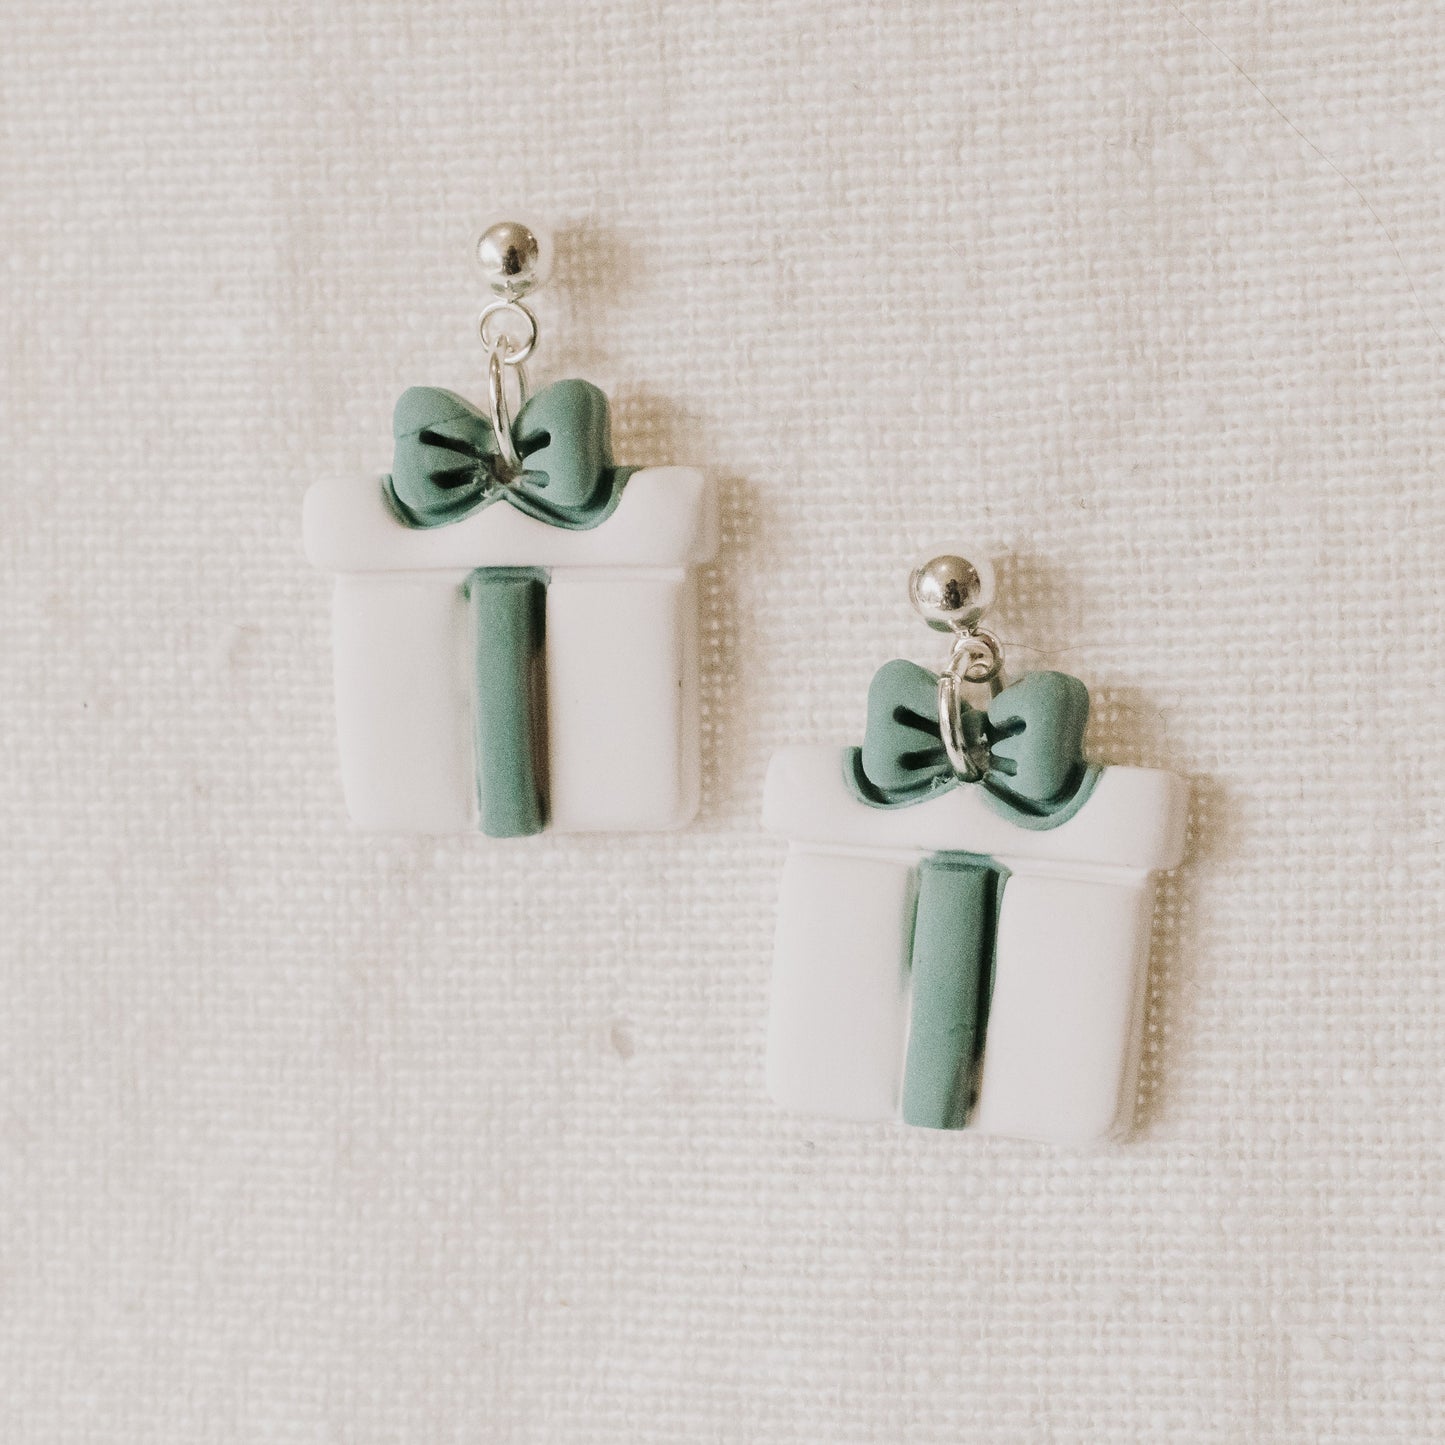 Soft Green Christmas Present Box Earrings - Claymore NZ-Earrings